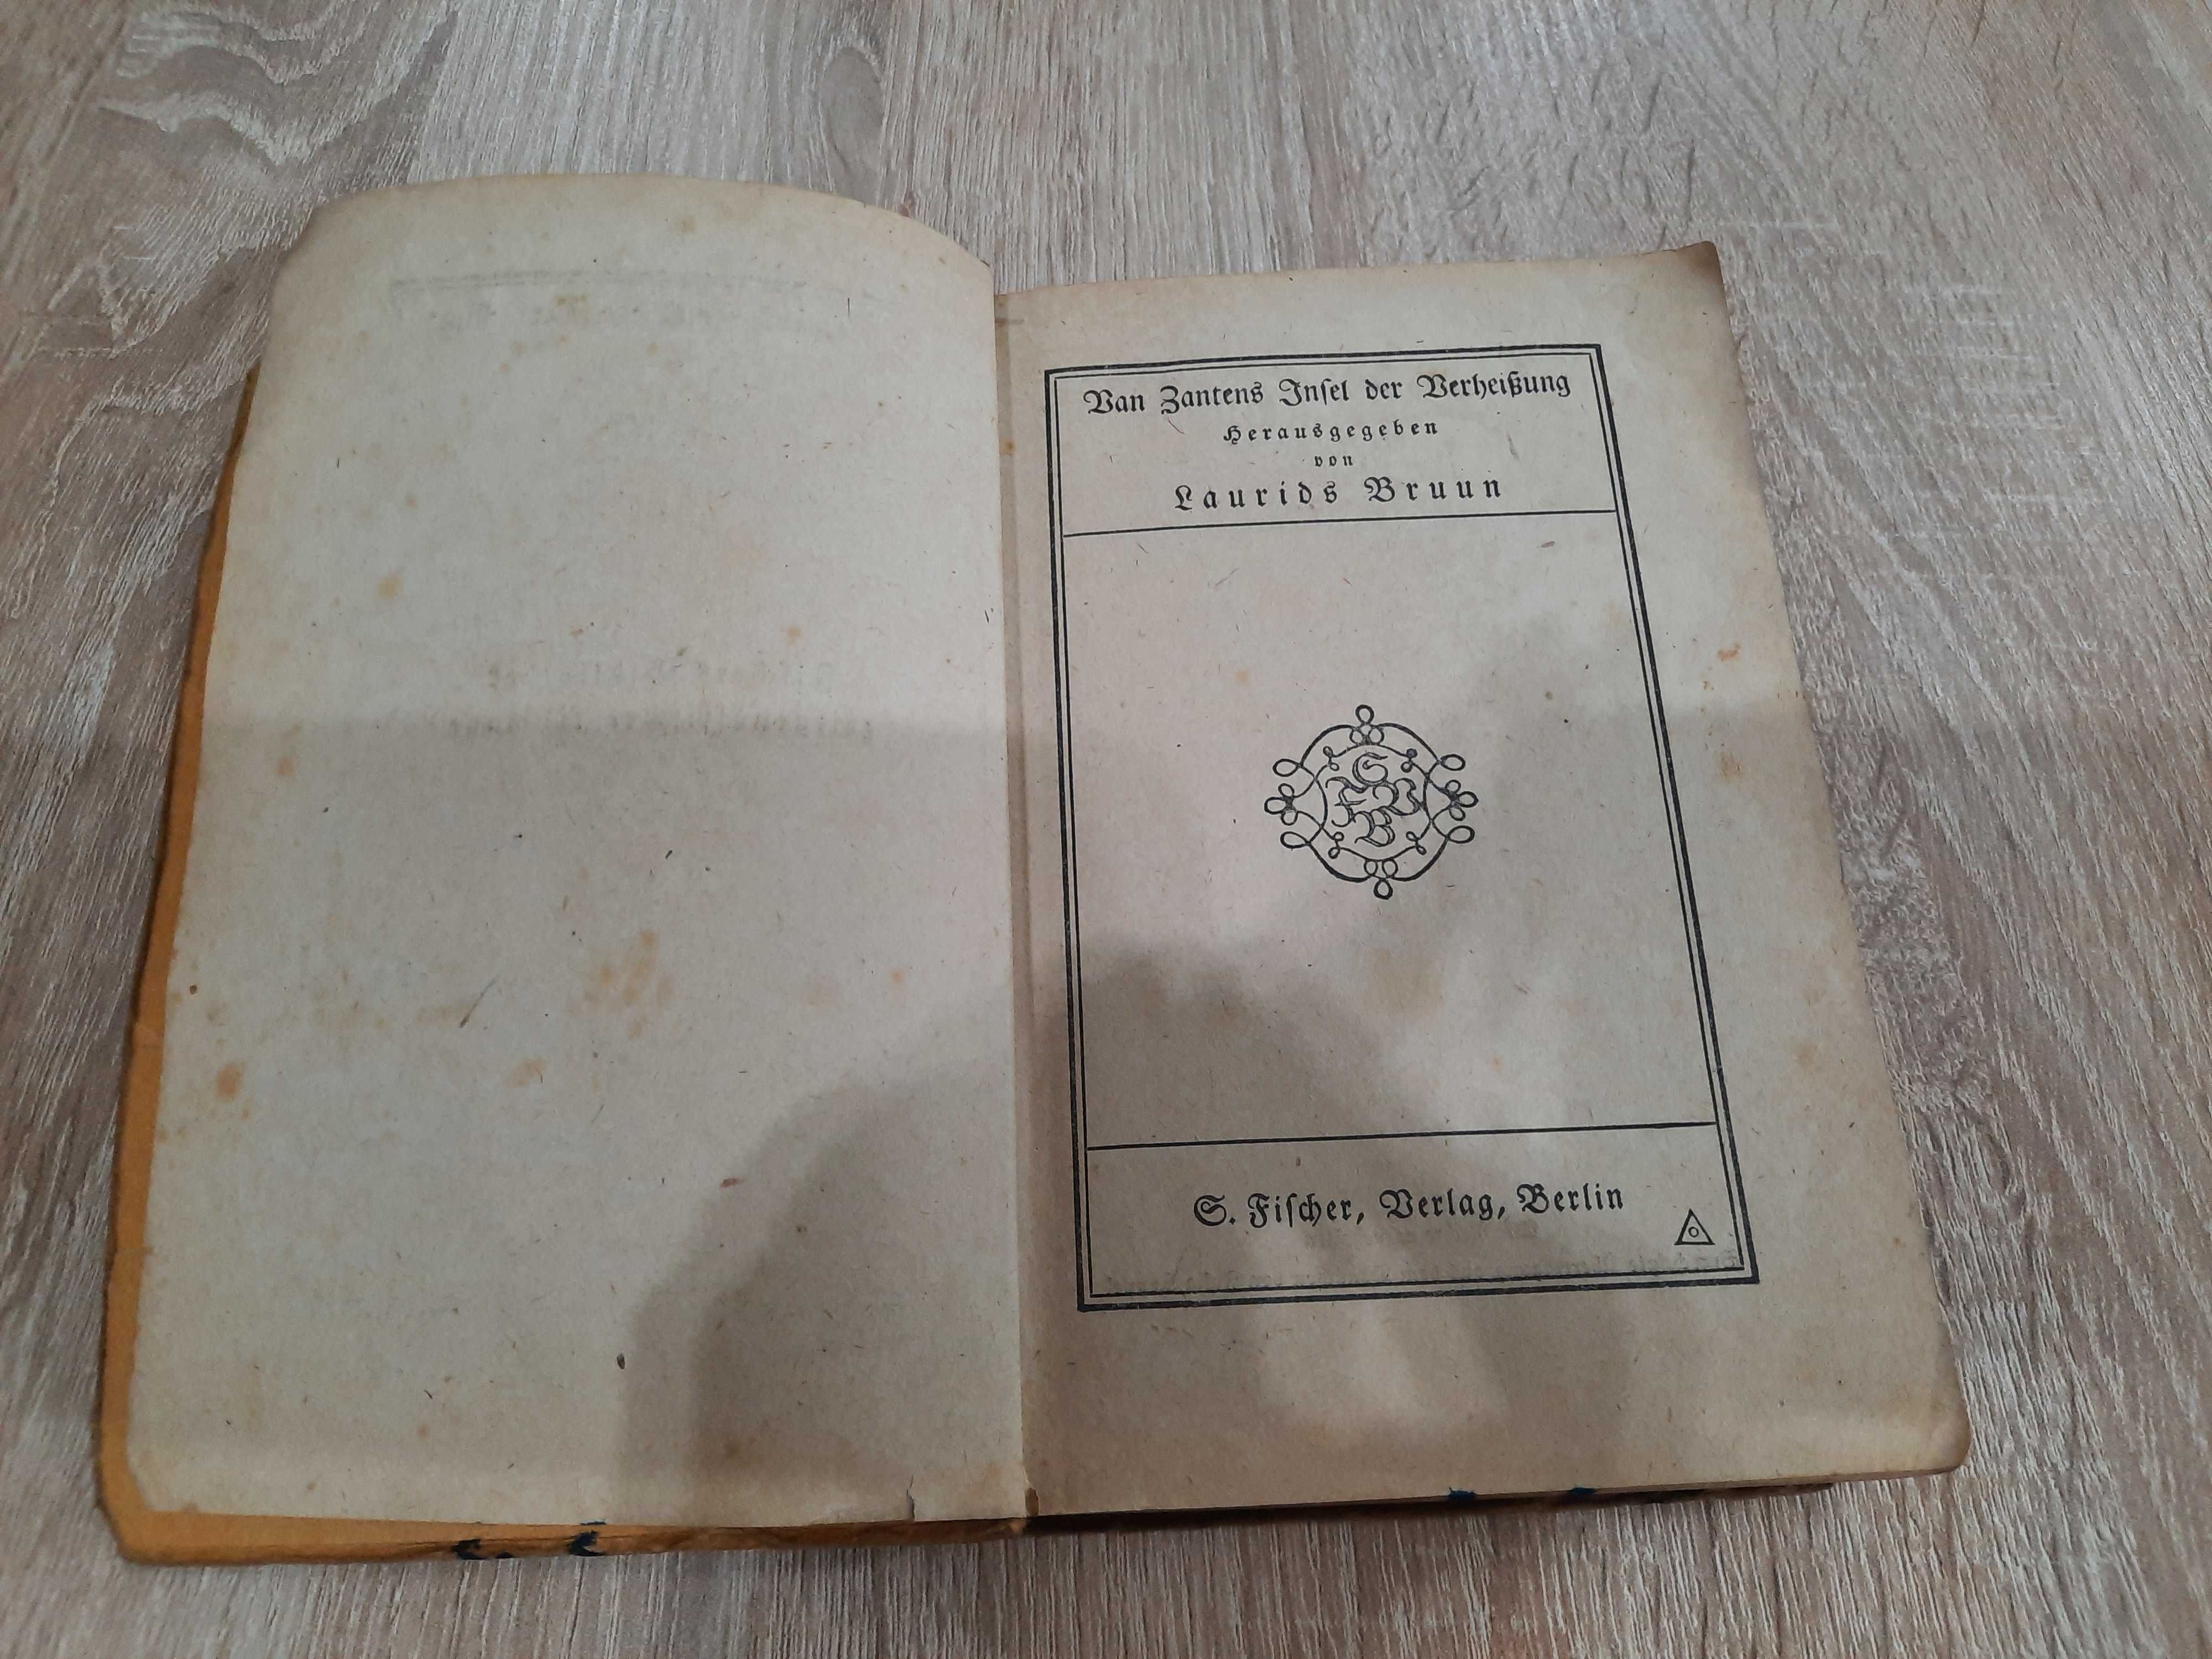 Stara książka 1920, Van Zantens Insel der Verheißung Laurids Bruun